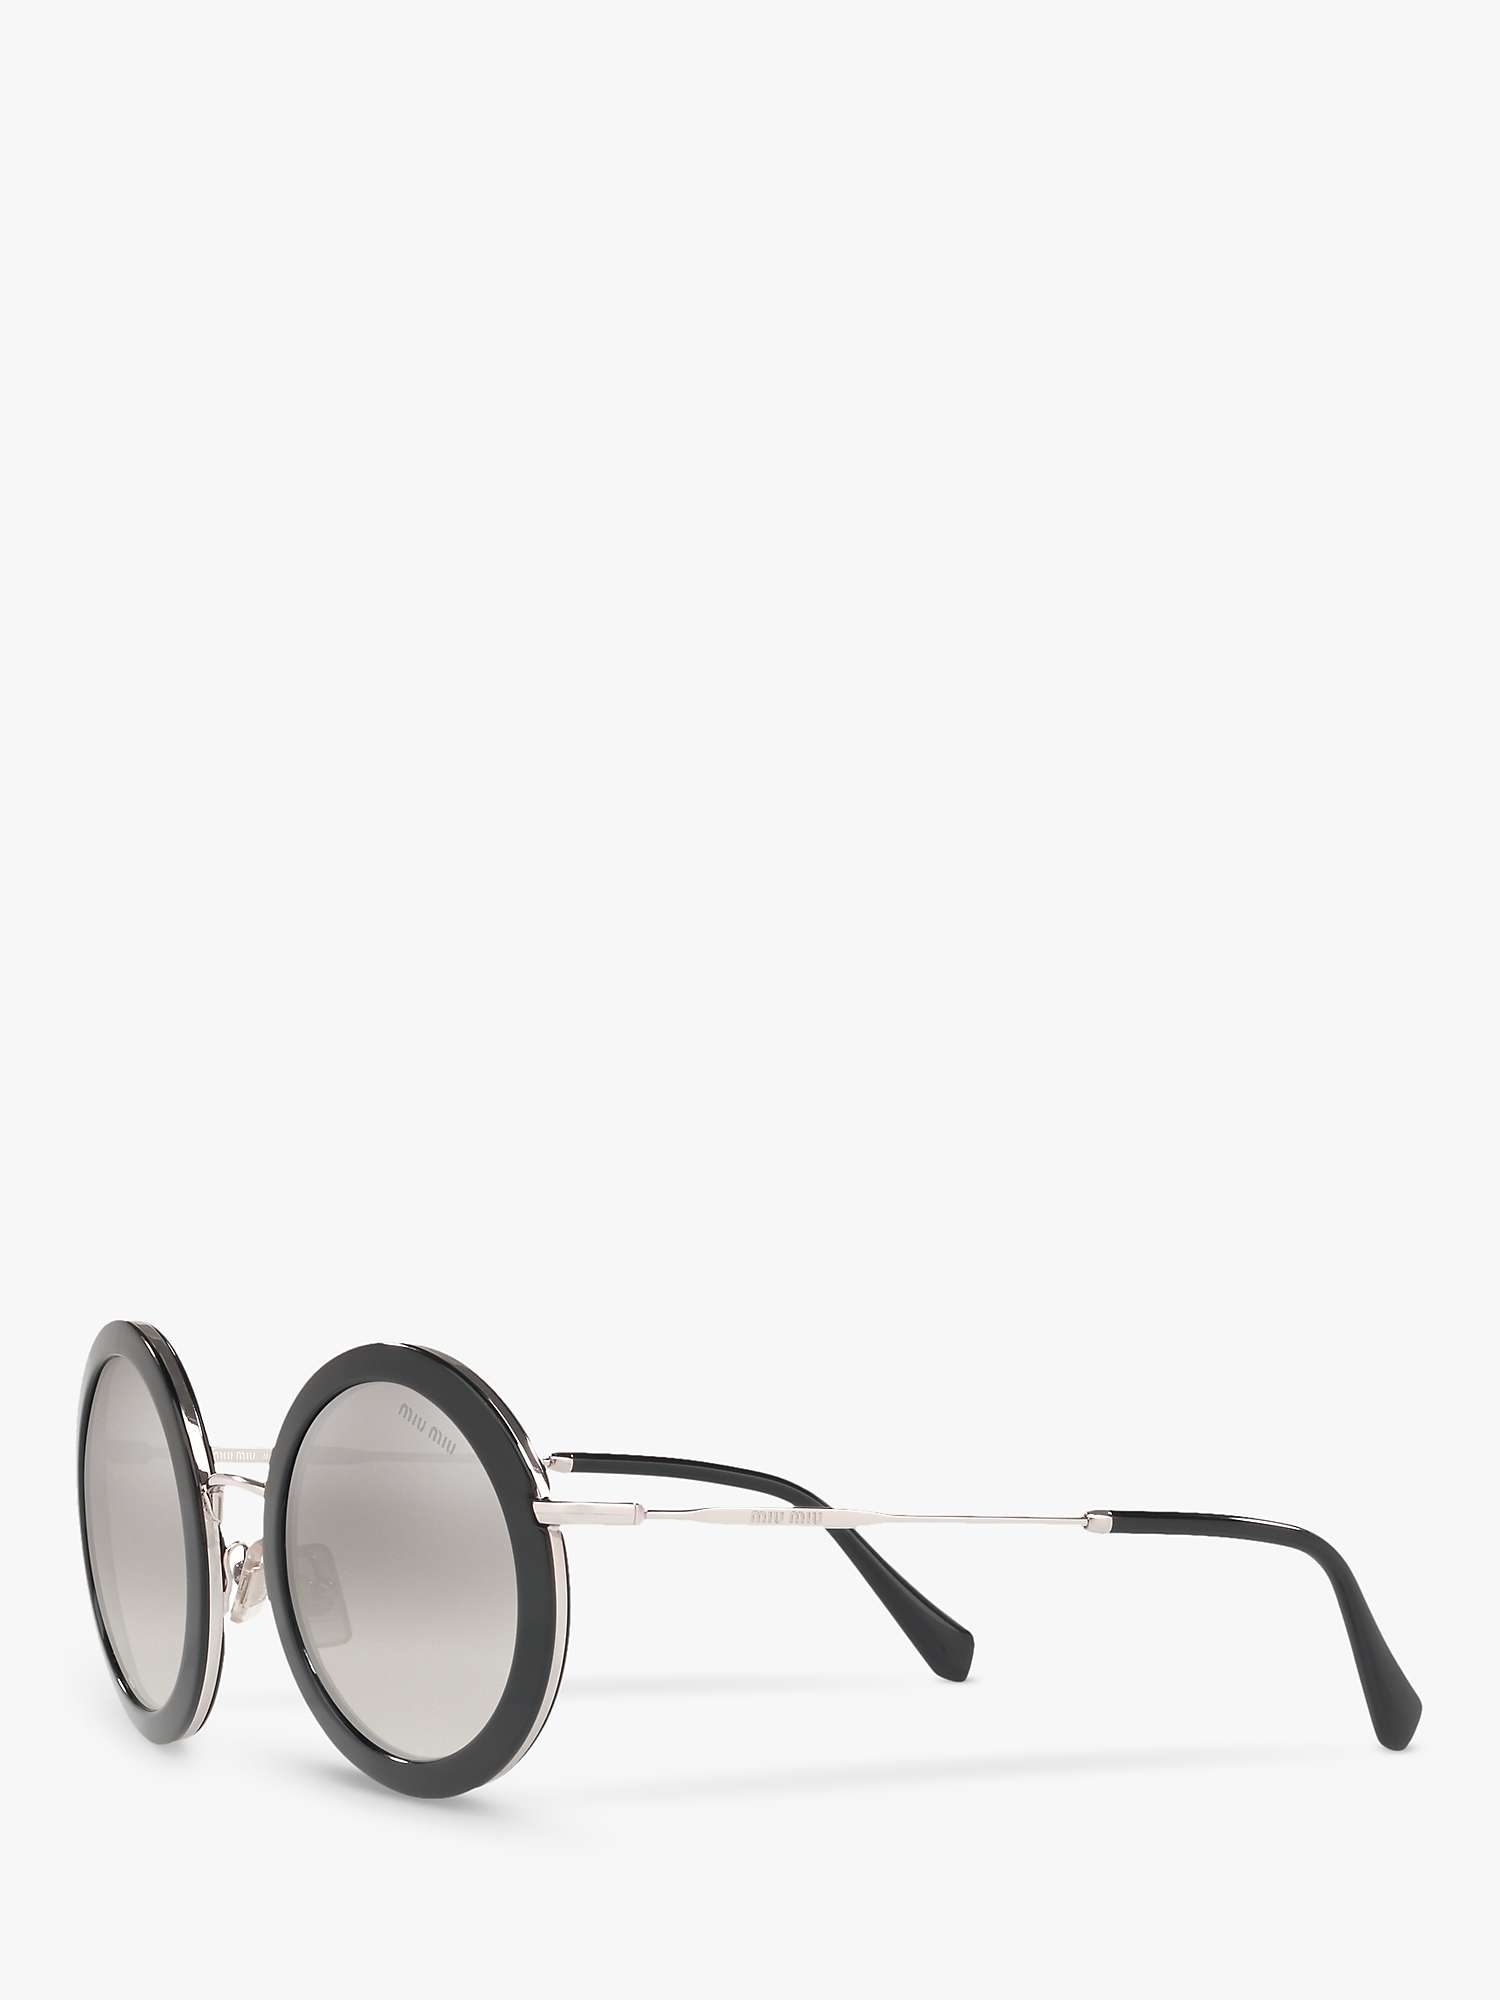 Buy Miu Miu MU 59US Women's Round Sunglasses, Black/Mirror Grey Online at johnlewis.com